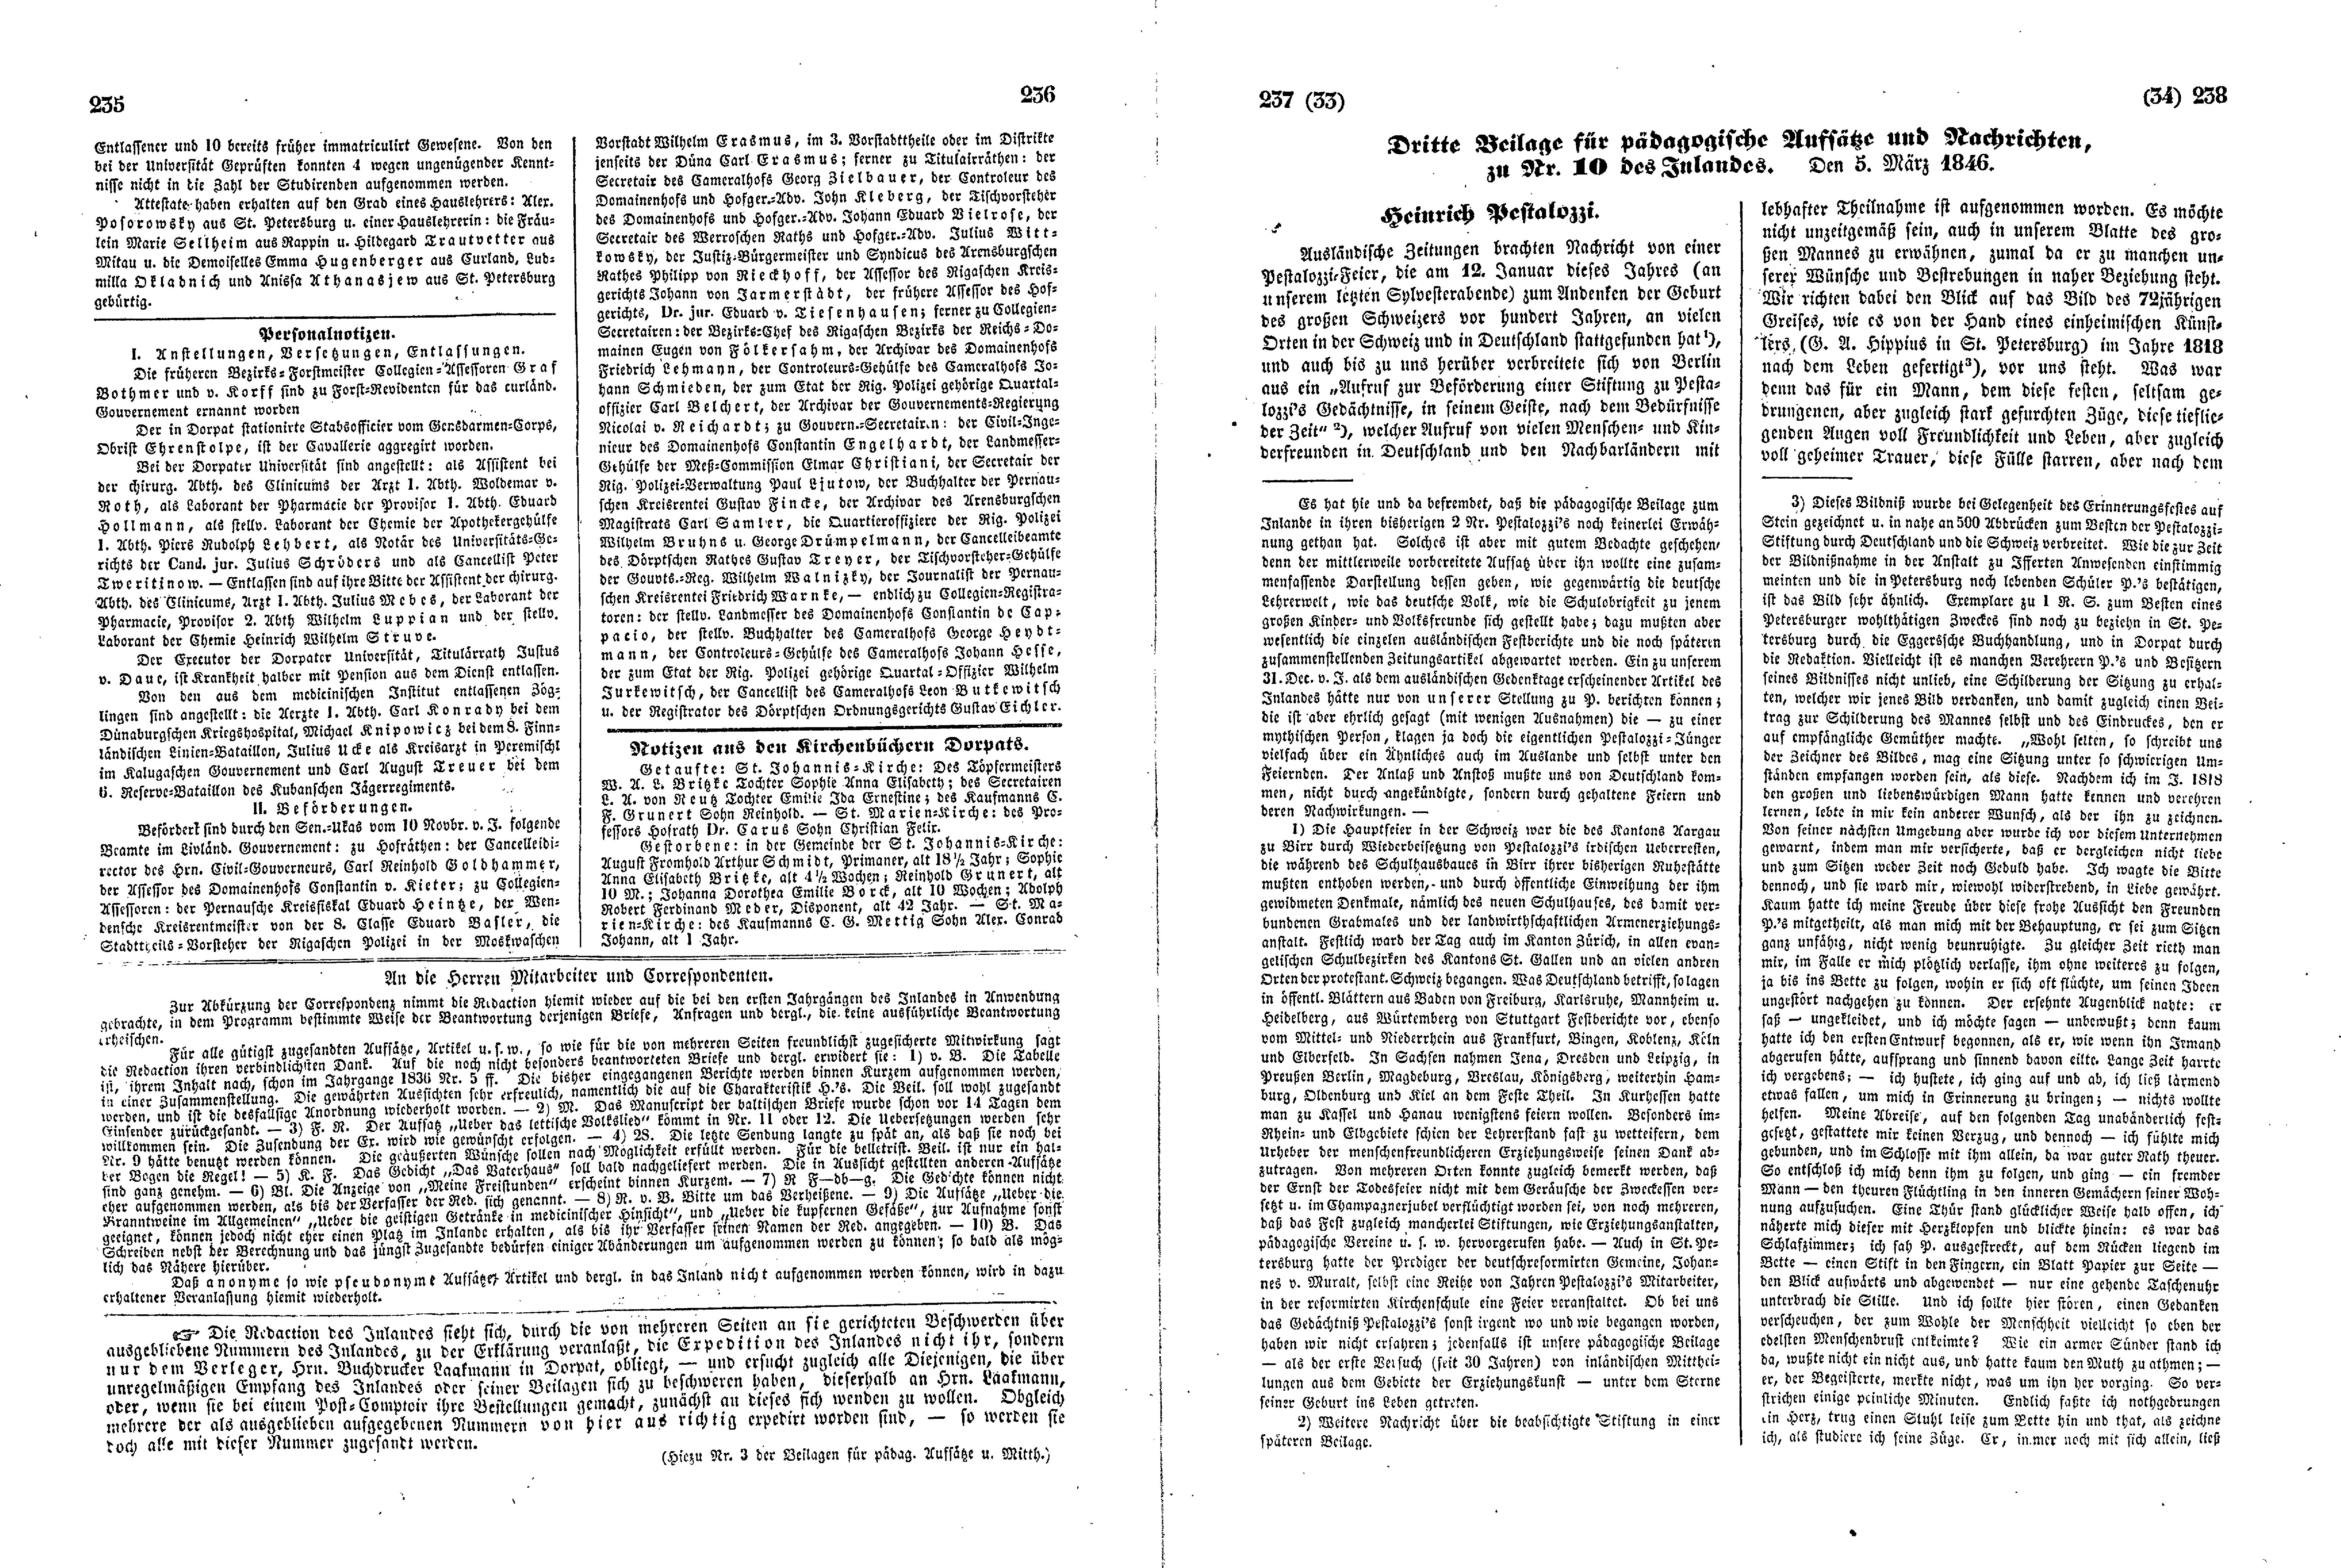 Das Inland [11] (1846) | 64. (235-238) Main body of text